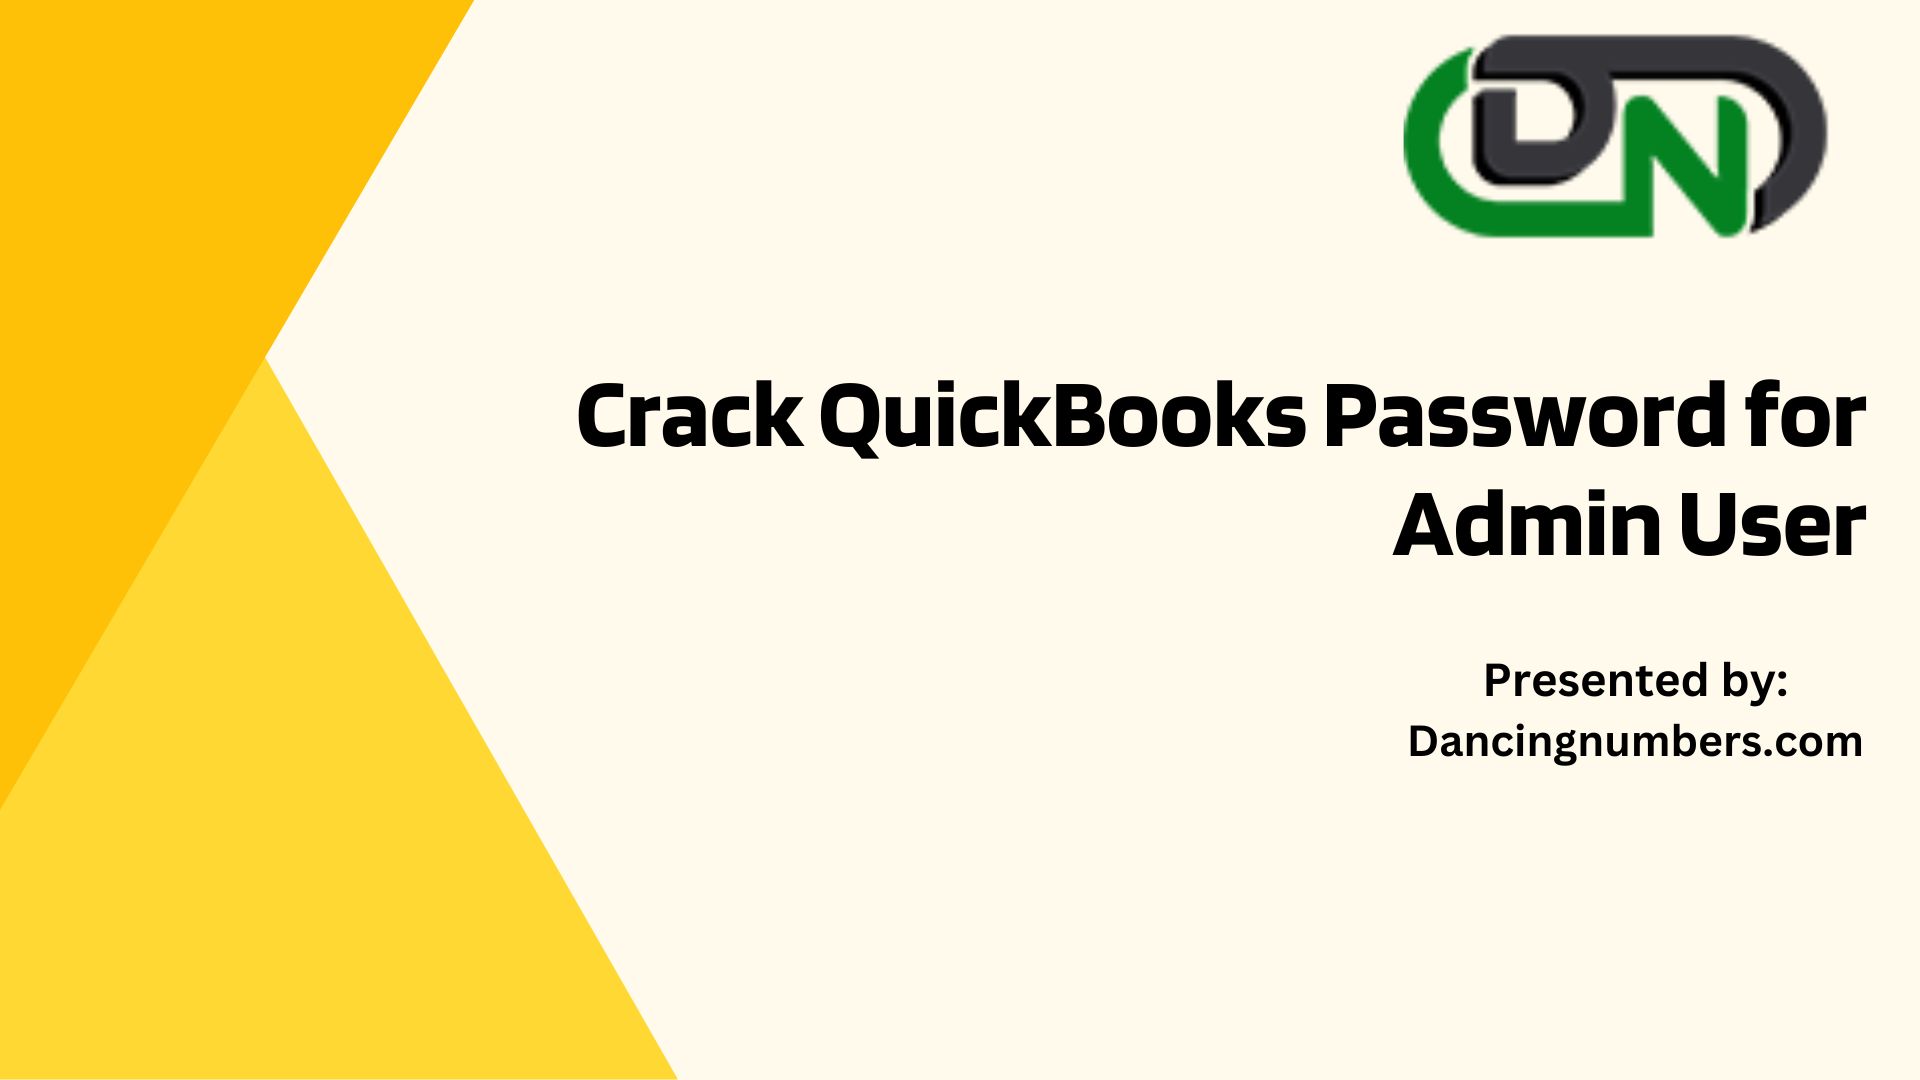 How to Crack QuickBooks Password for Admin User?